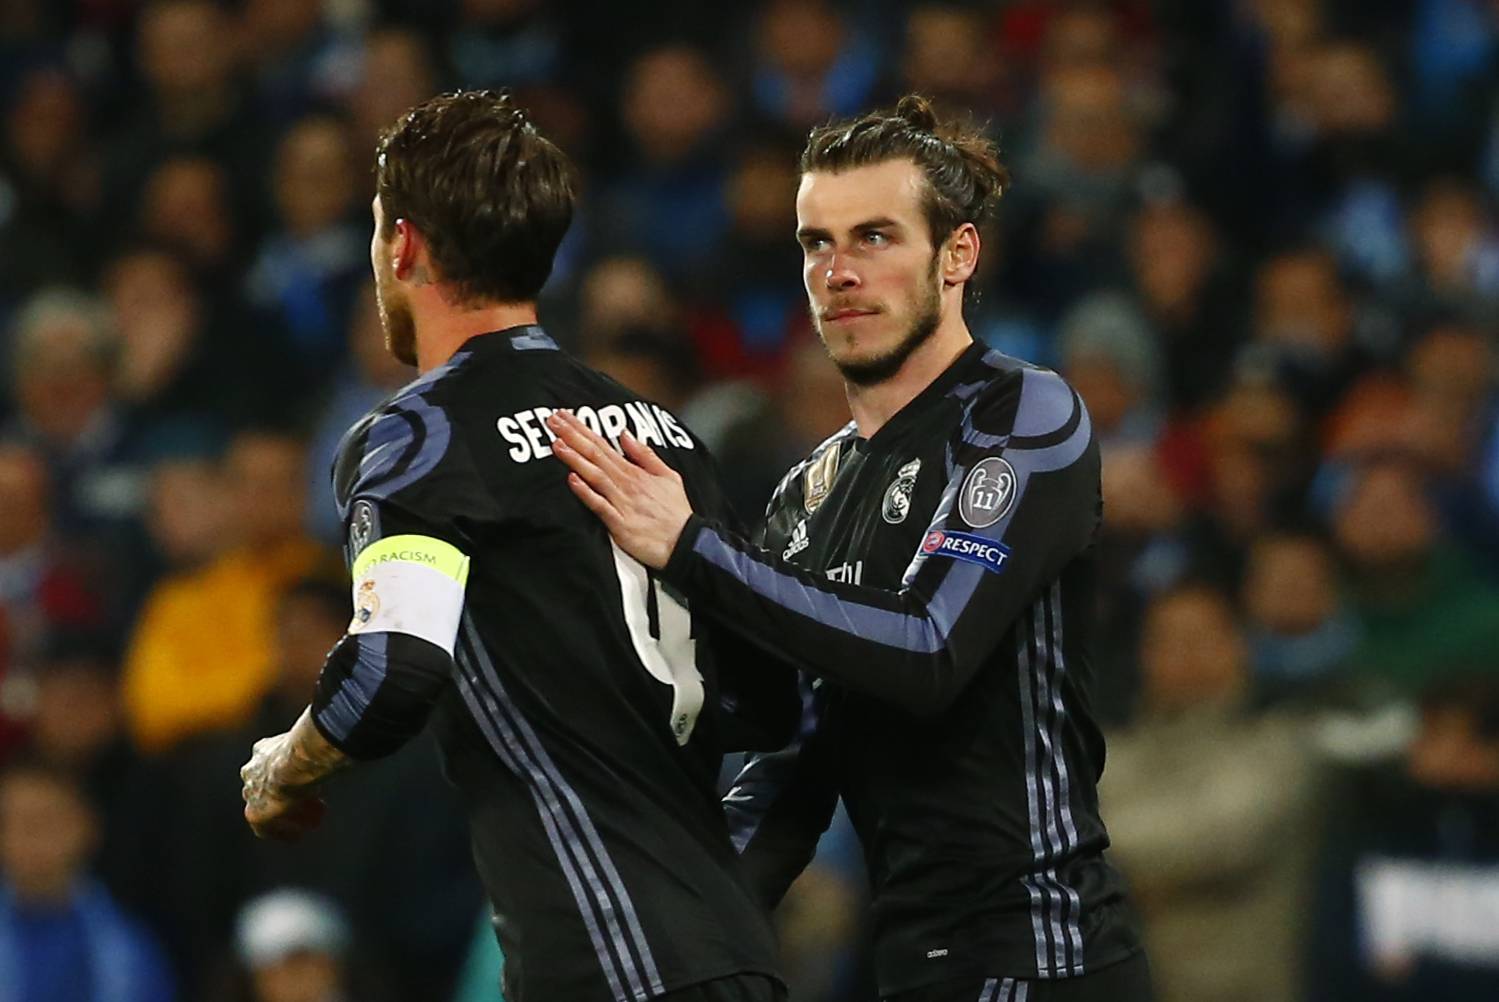 Real Madrid's Gareth Bale with Real Madrid's Sergio Ramos